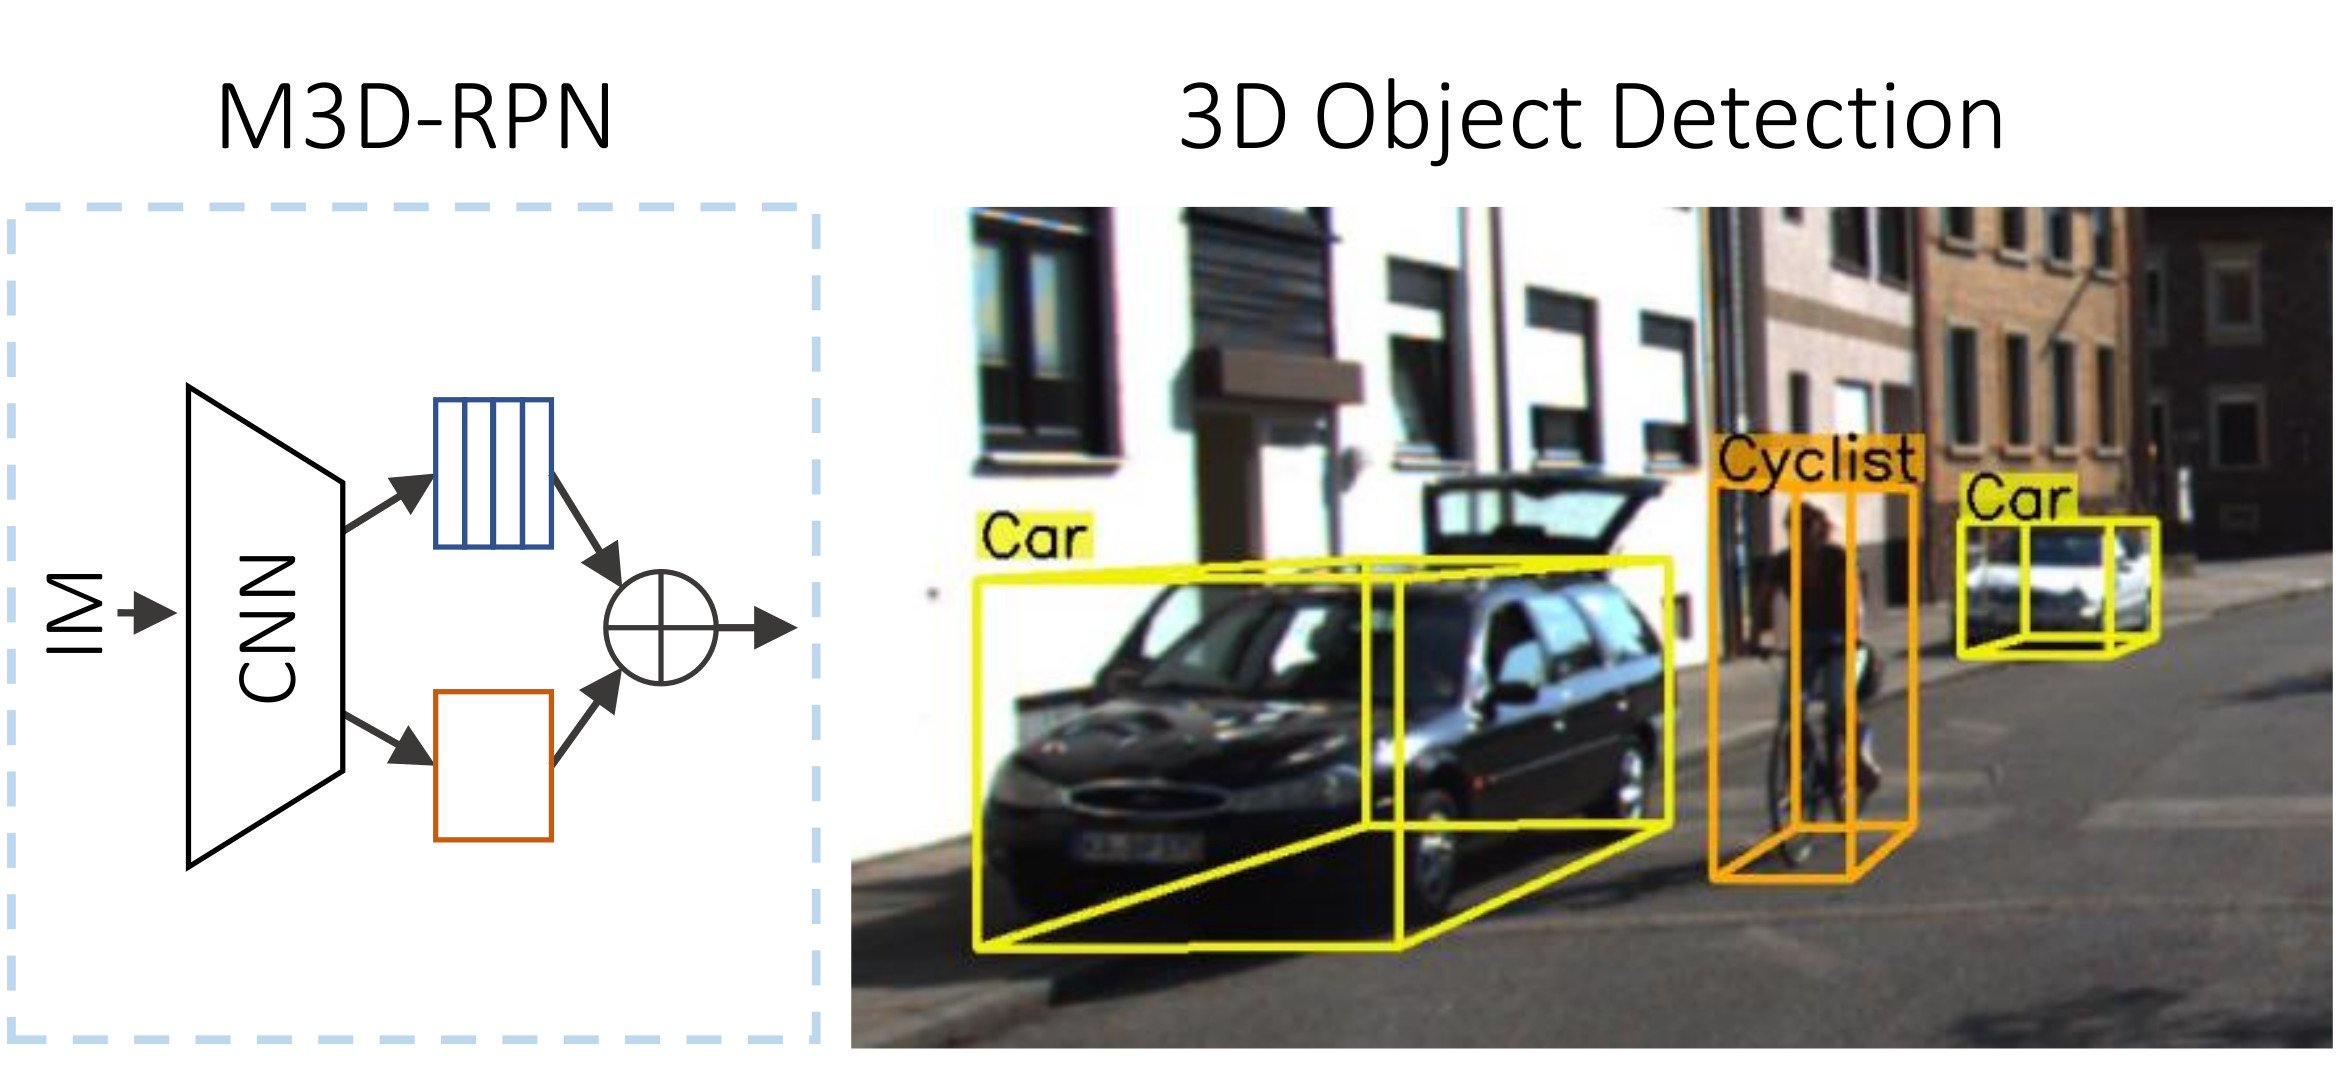 3D Object Recognition